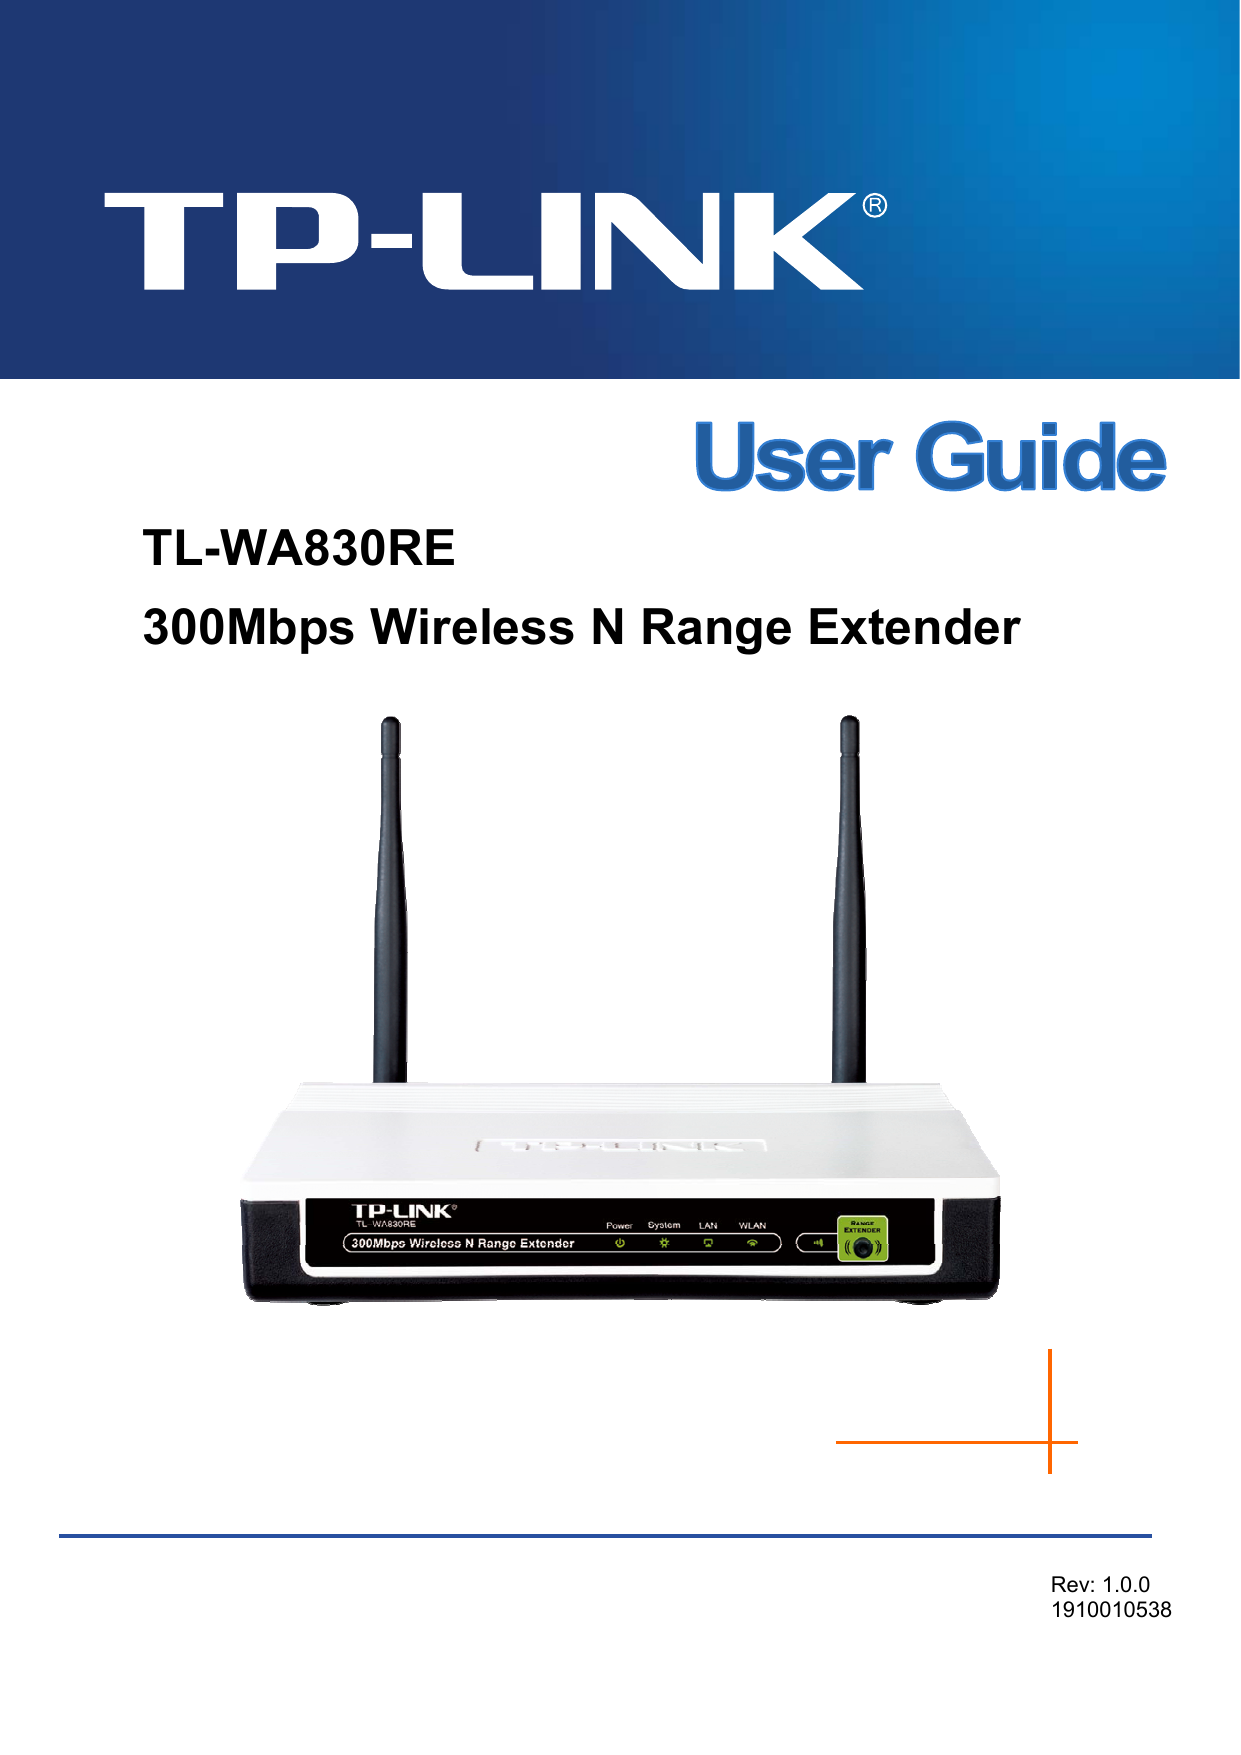   TL-WA830RE 300Mbps Wireless N Range Extender    Rev: 1.0.0 1910010538  